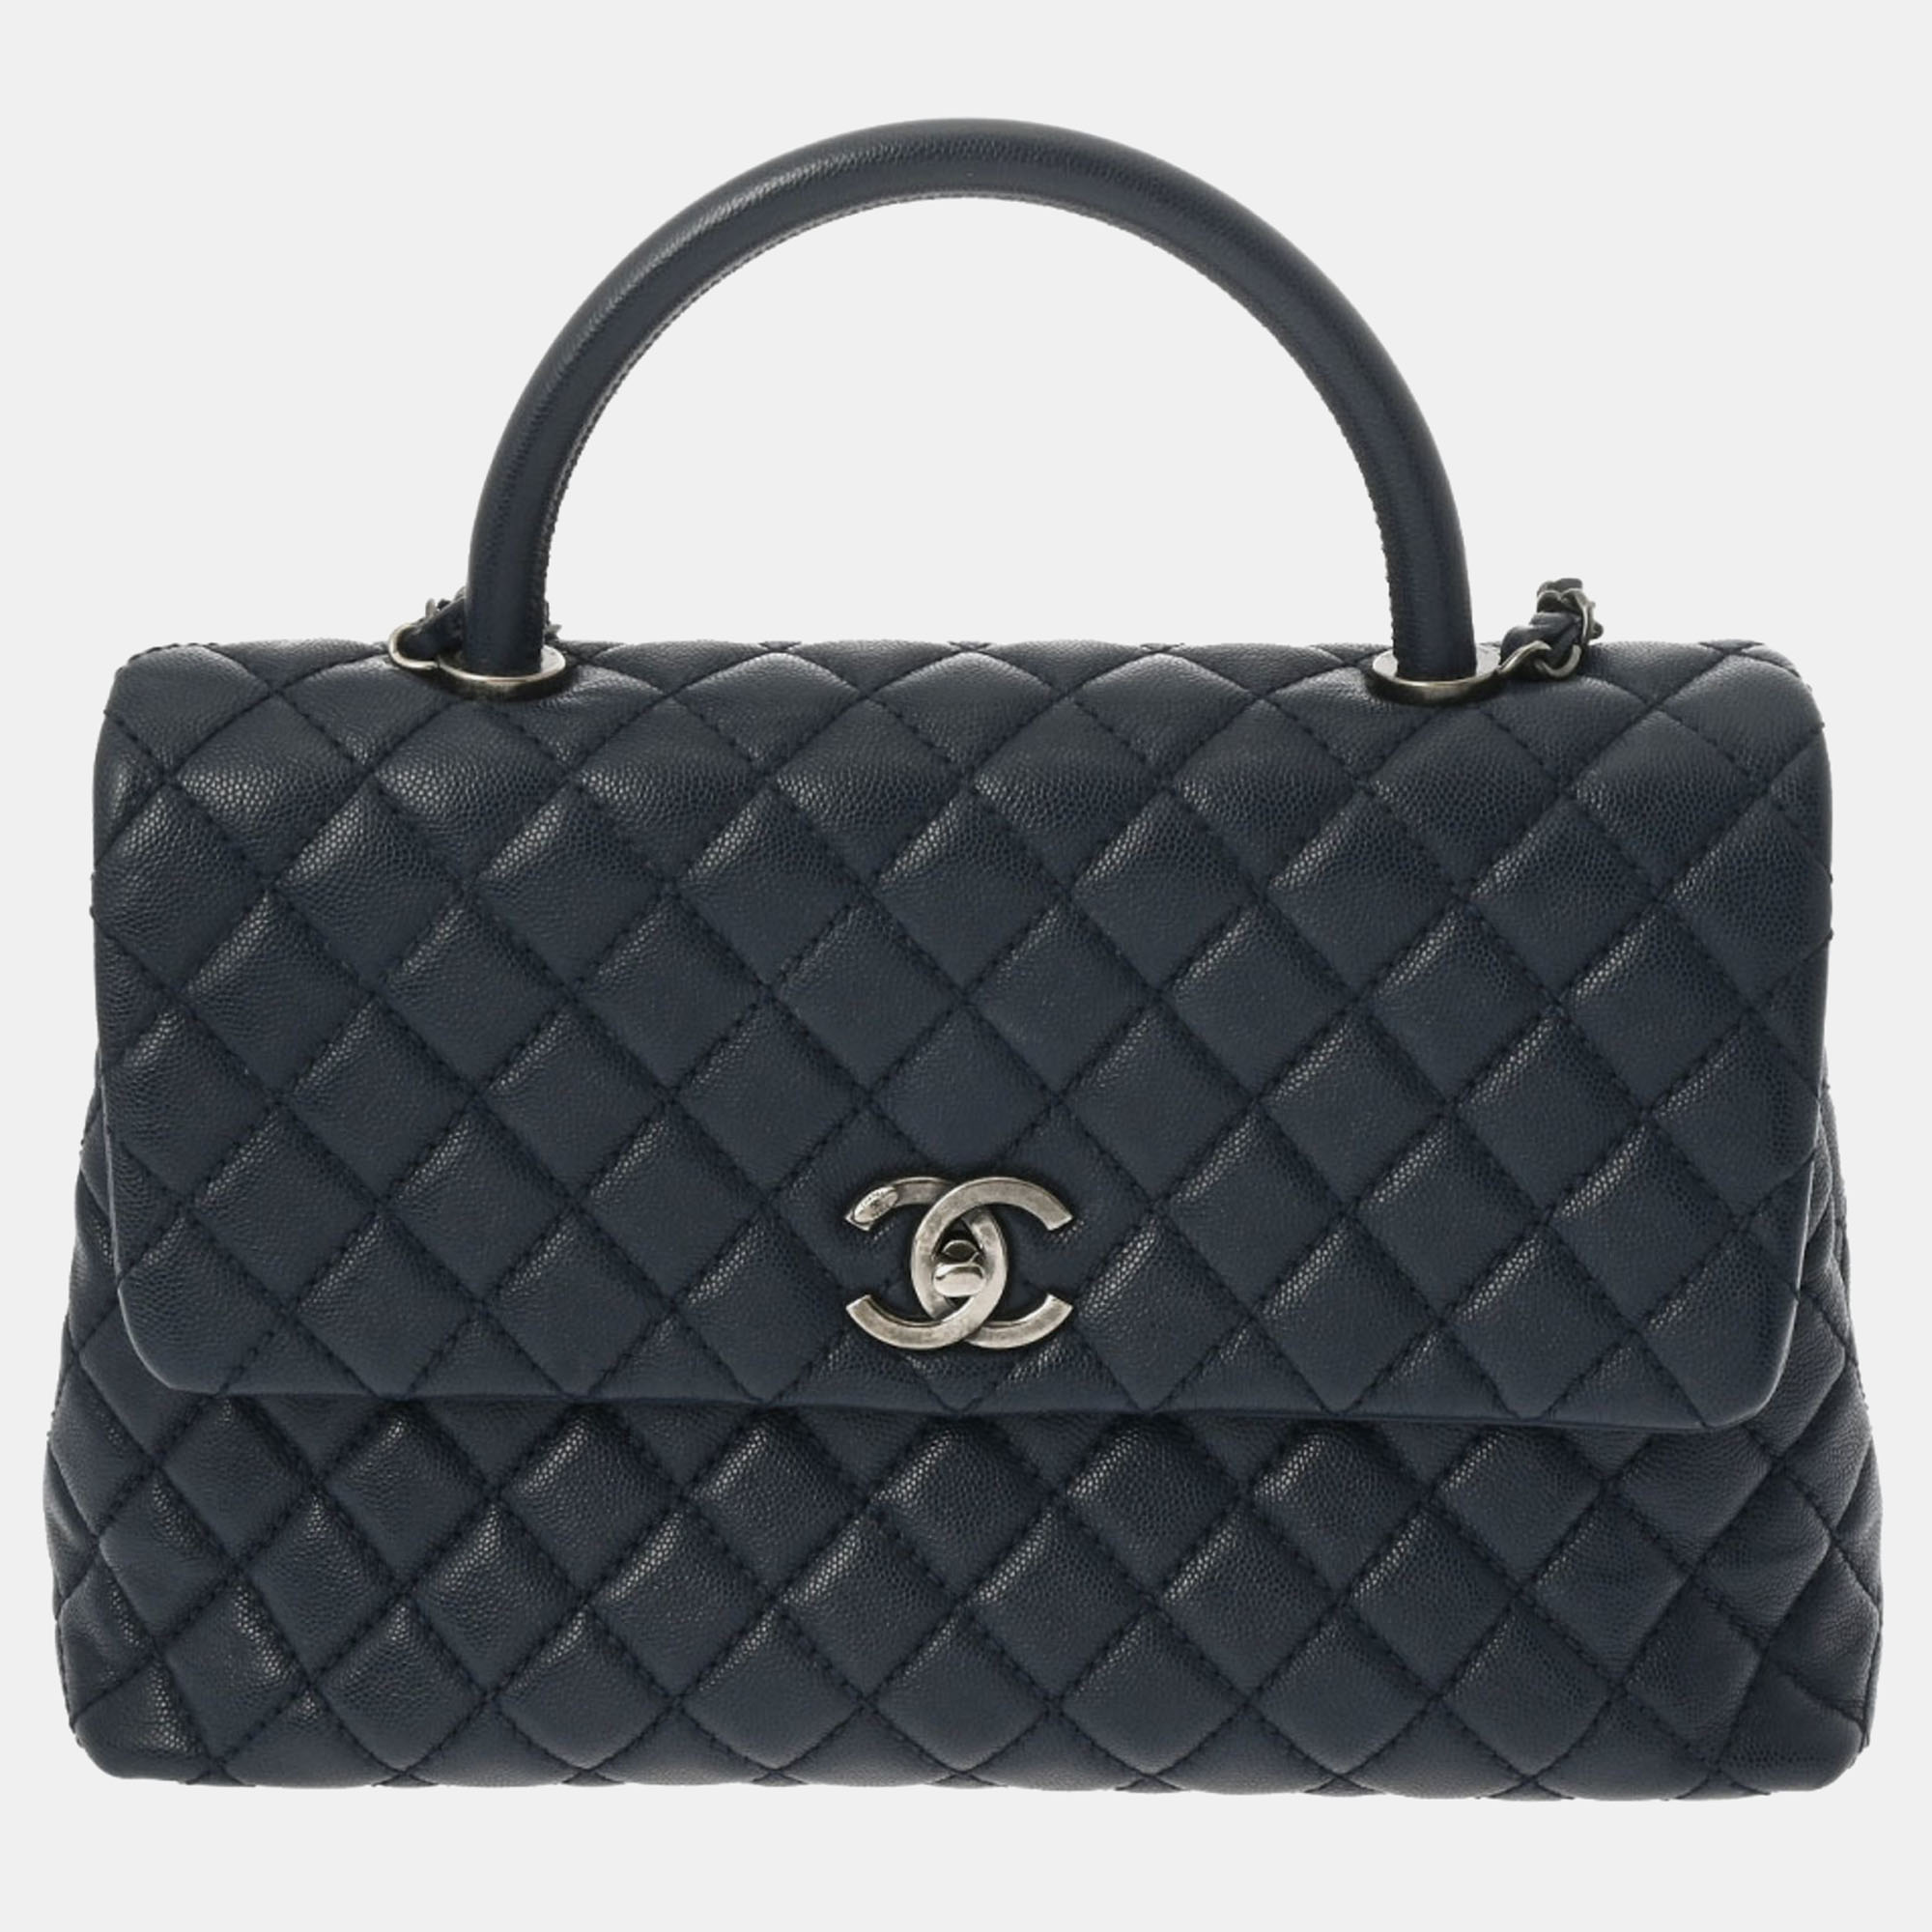 Chanel navy blue caviar leather medium coco top handle bag